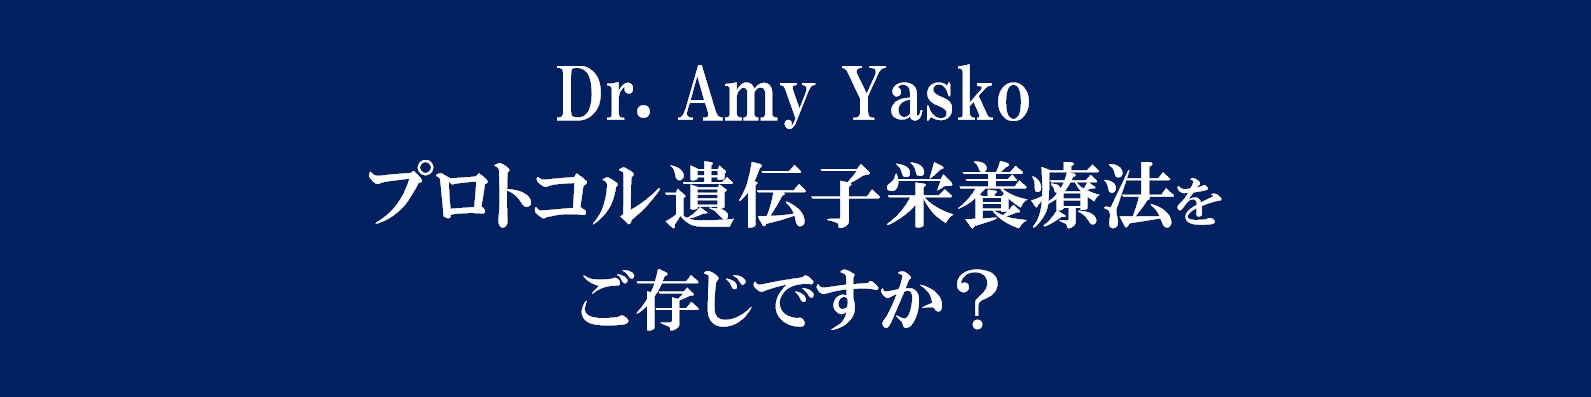 Dr. Amy Yaskoプロトコル遺伝子栄養療法を ご存じですか？